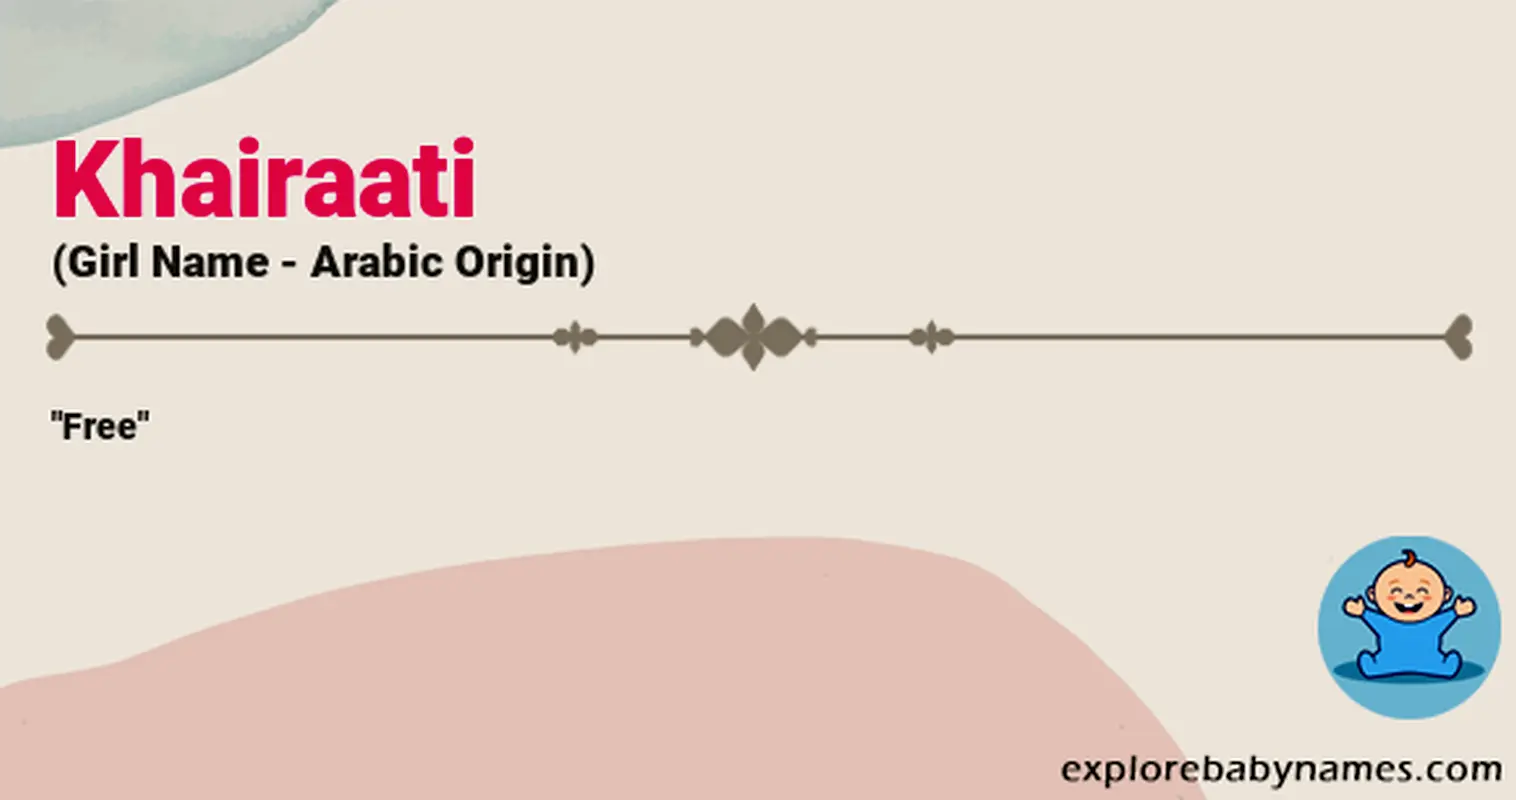 Meaning of Khairaati